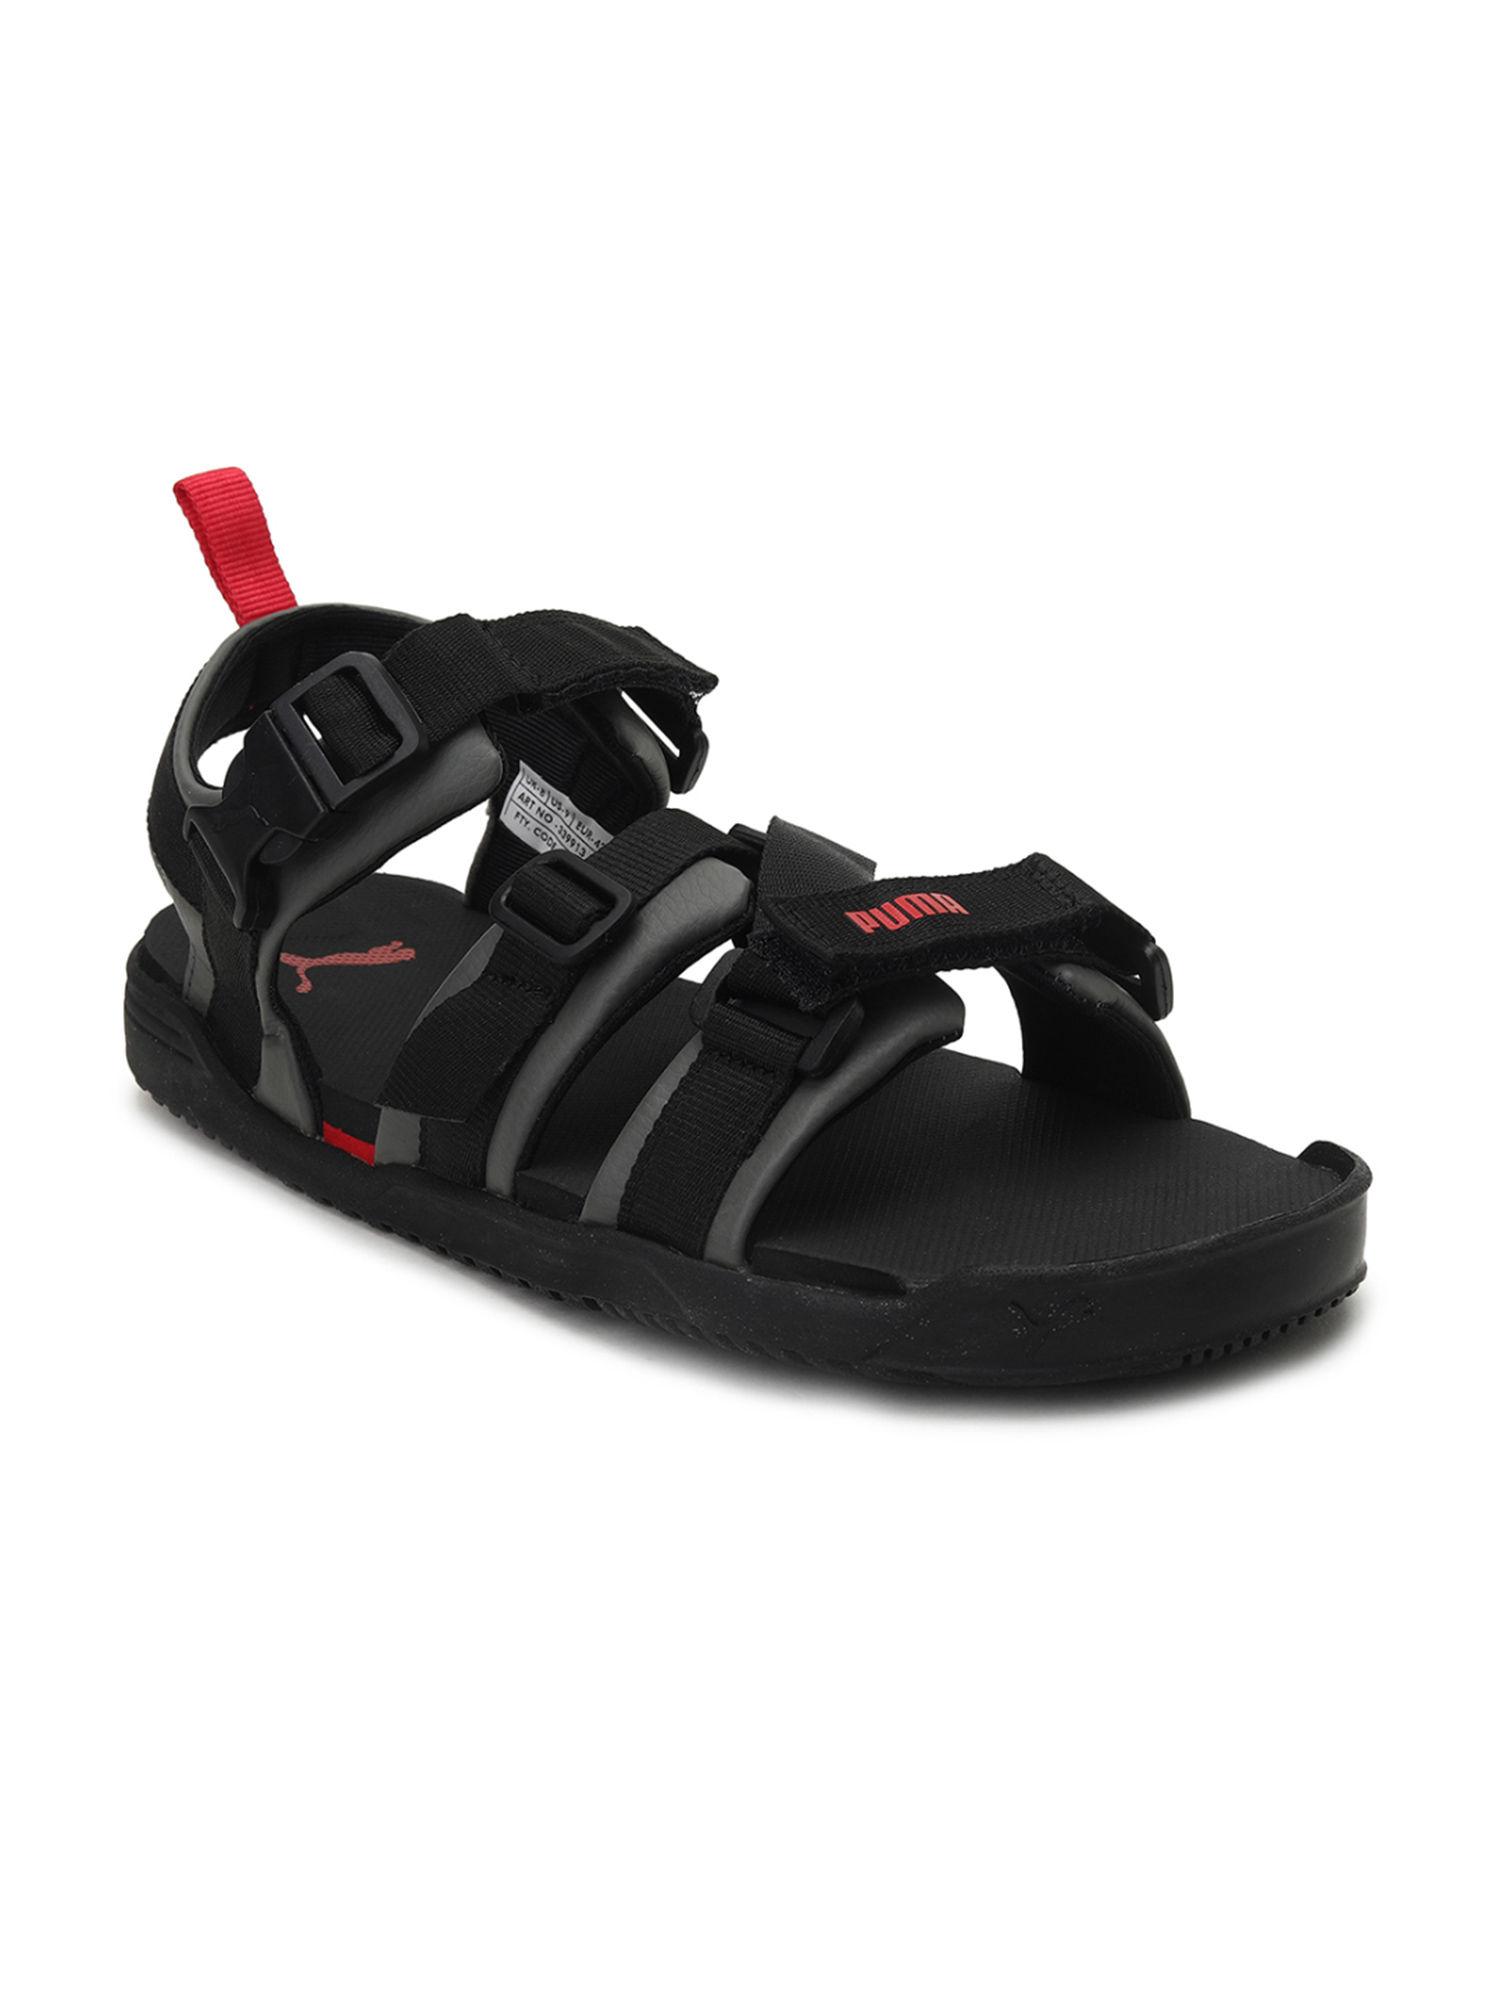 prime x men black sandals